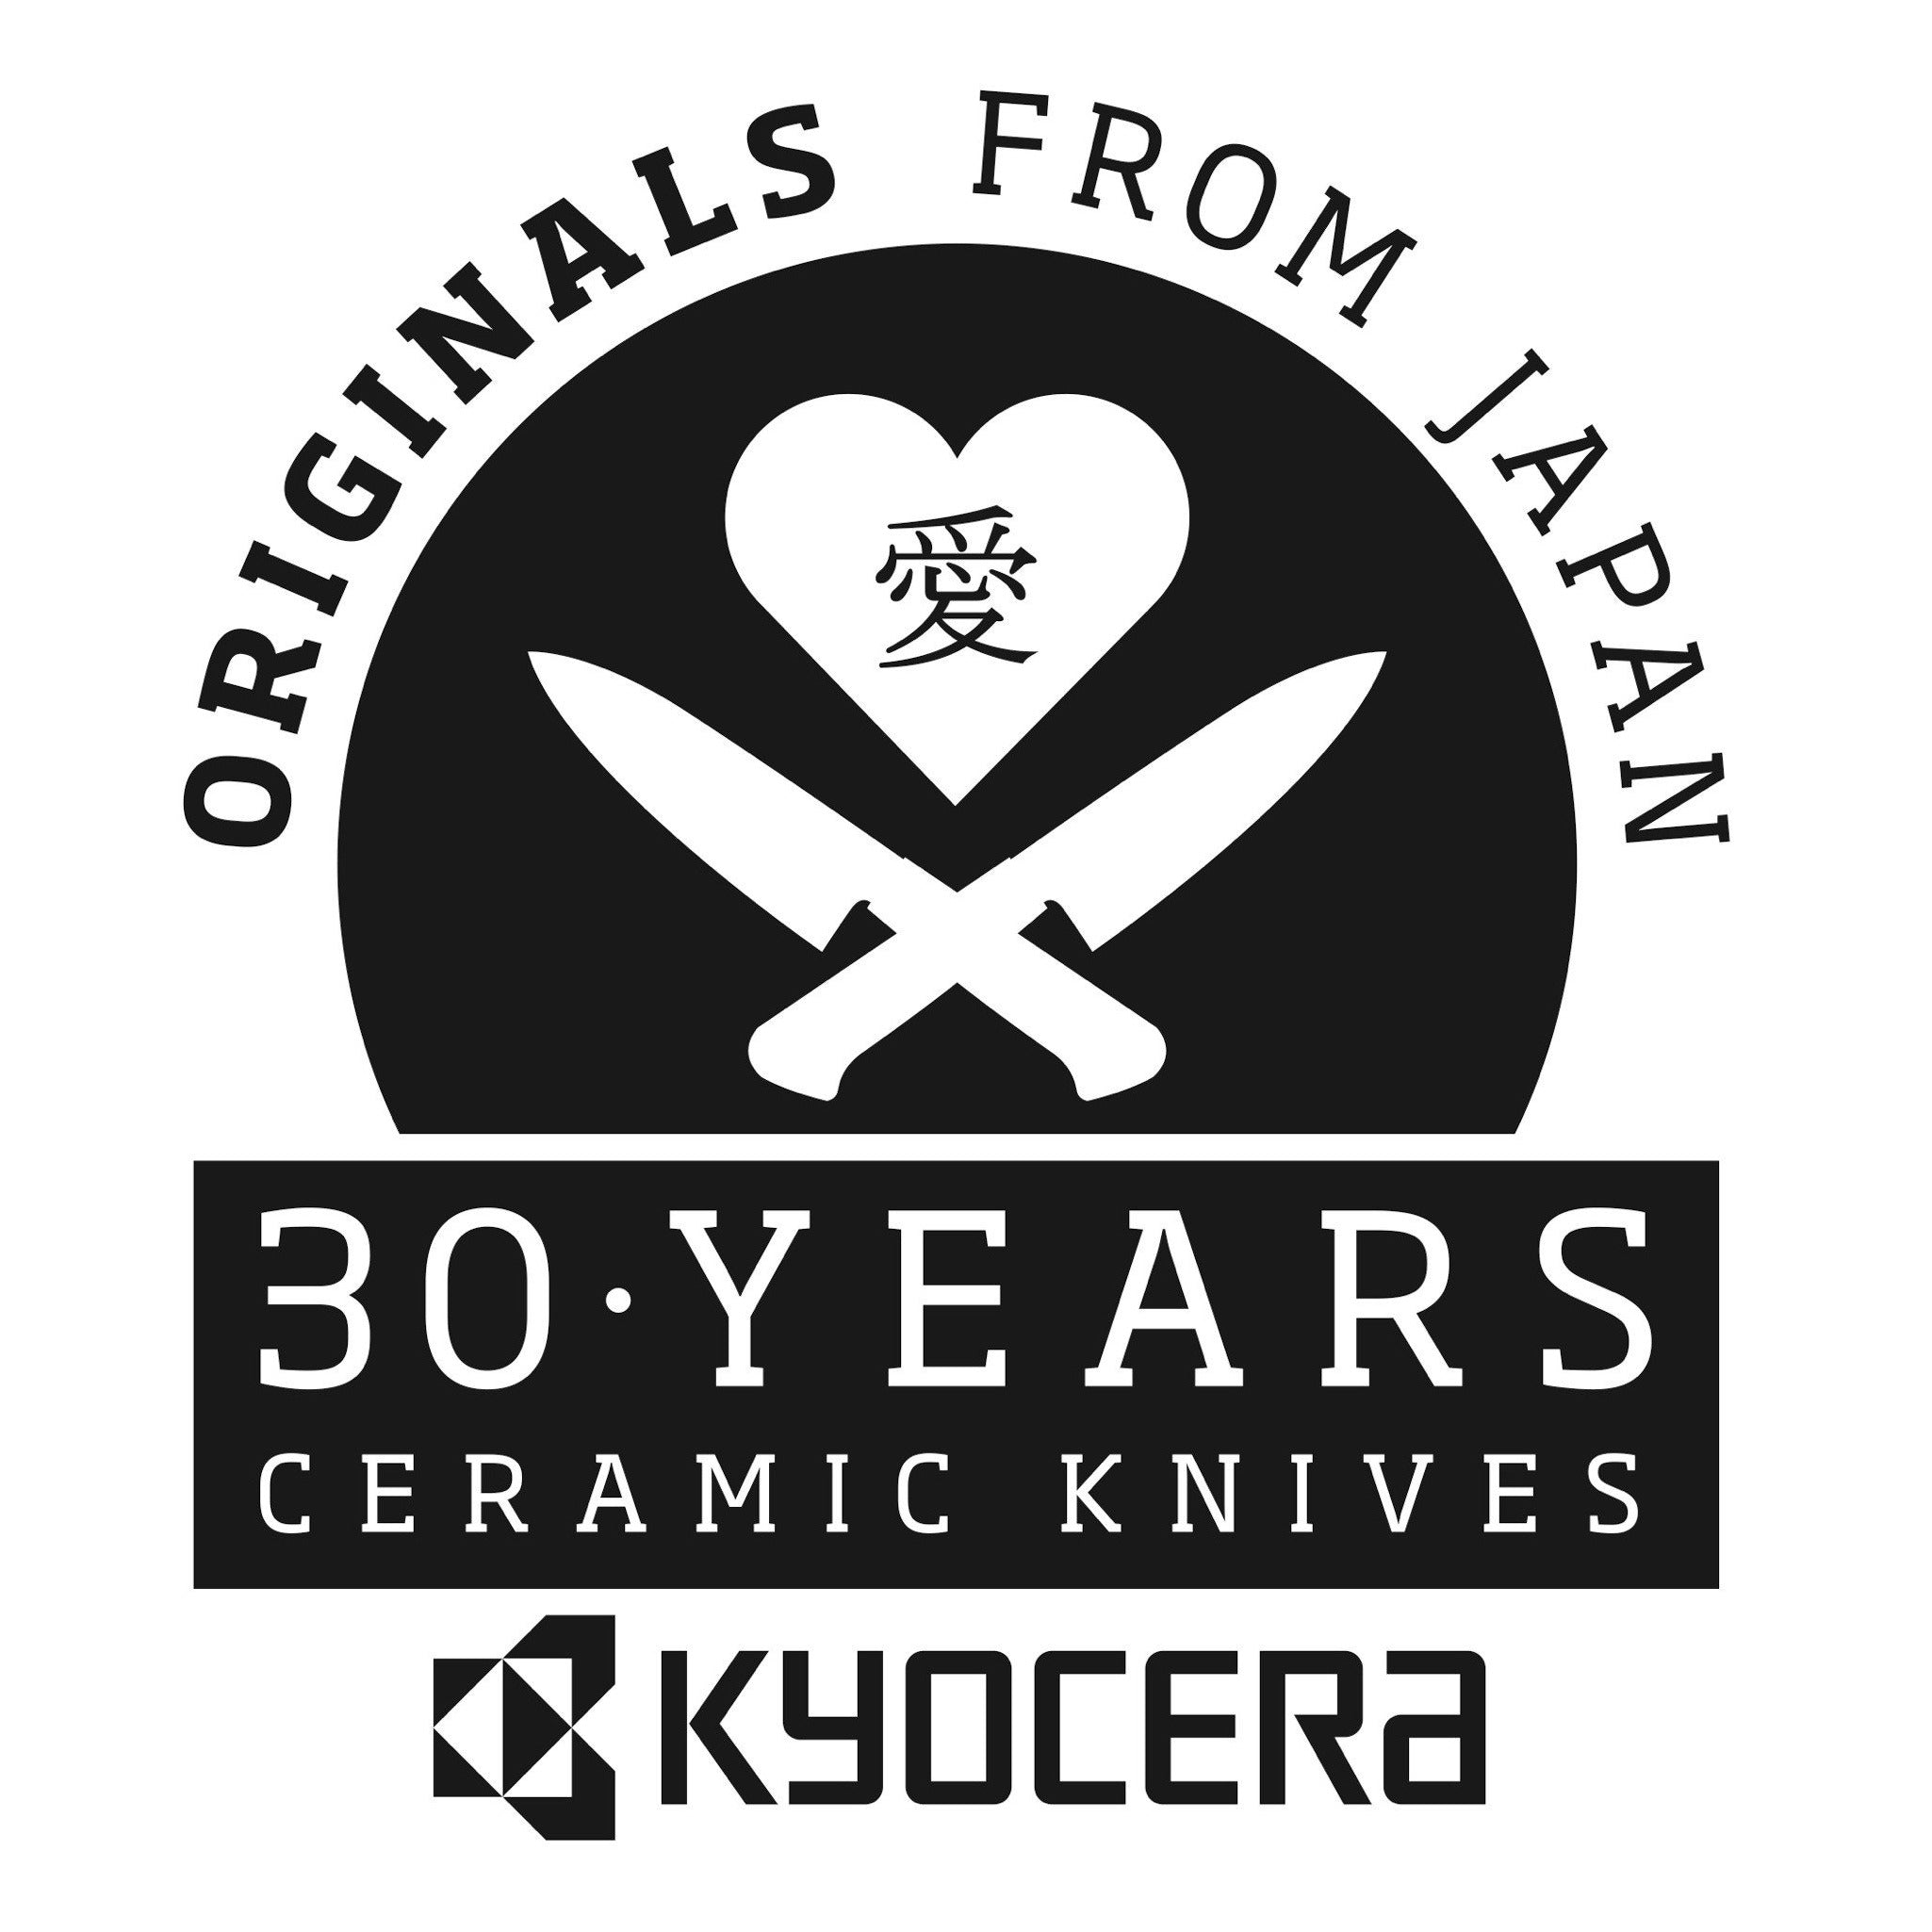 Bryne keramisk for stålkniver, 35 cm - Kyocera - R8 Design